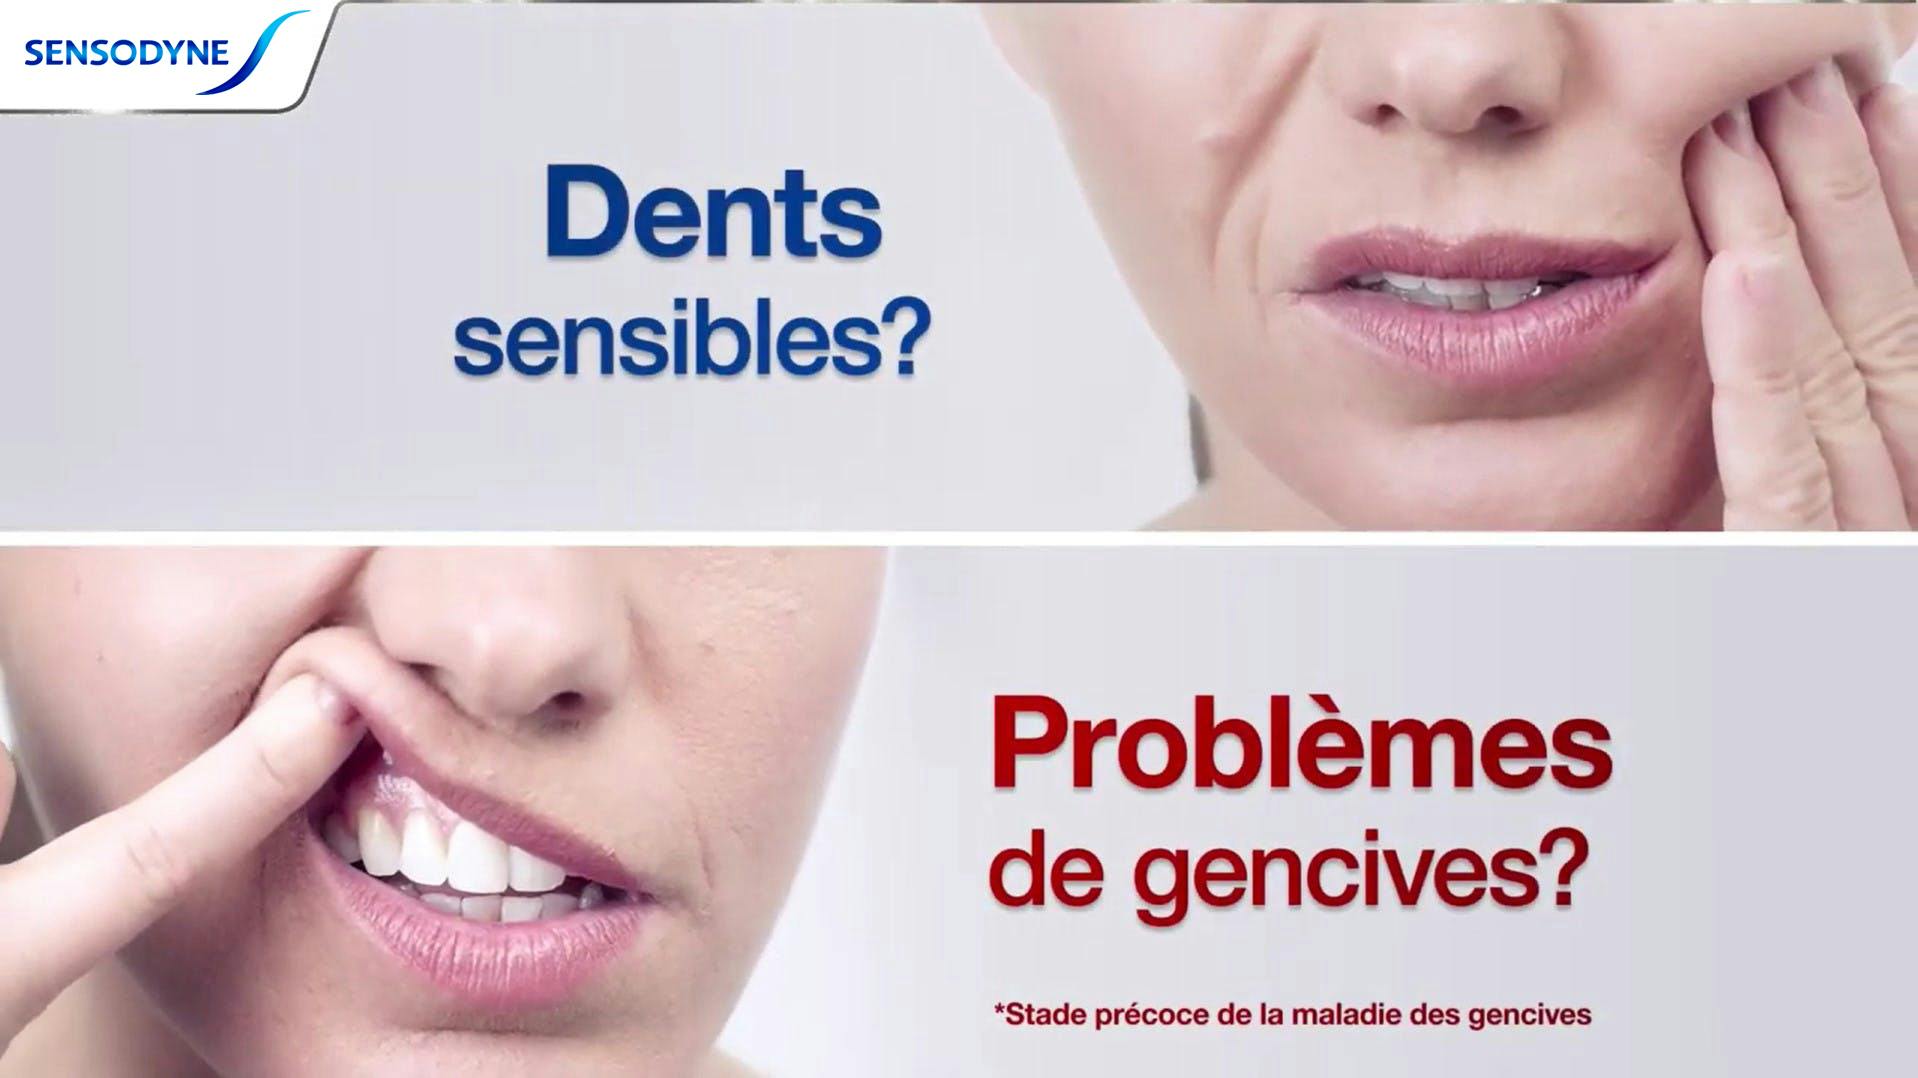 Sensitive teeth and gum problems